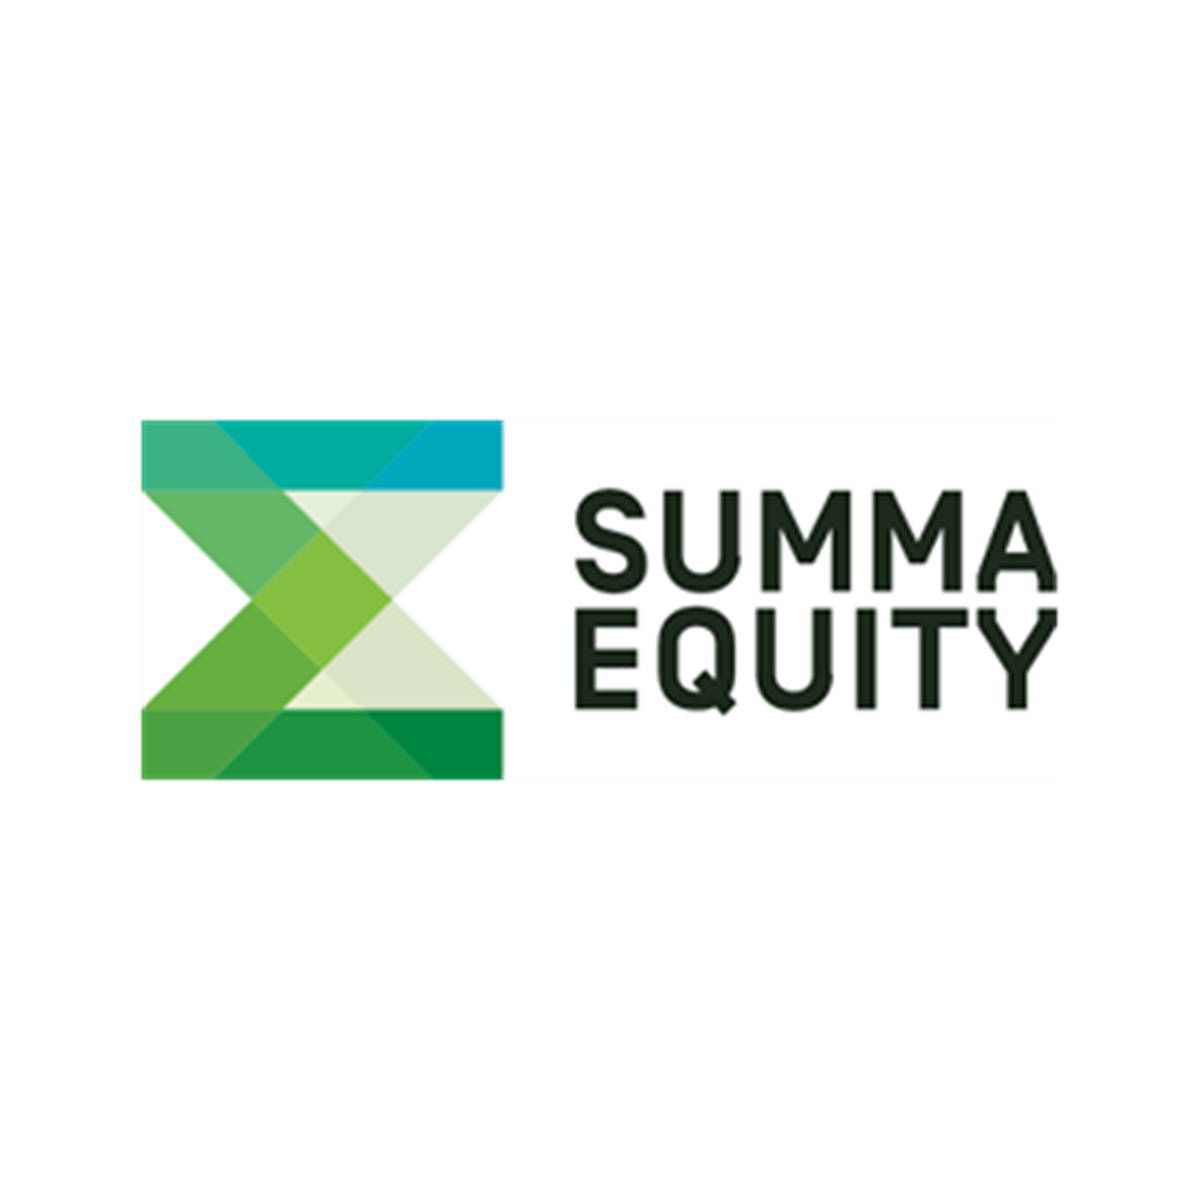 summa-equity-insights-news-large-logo-1